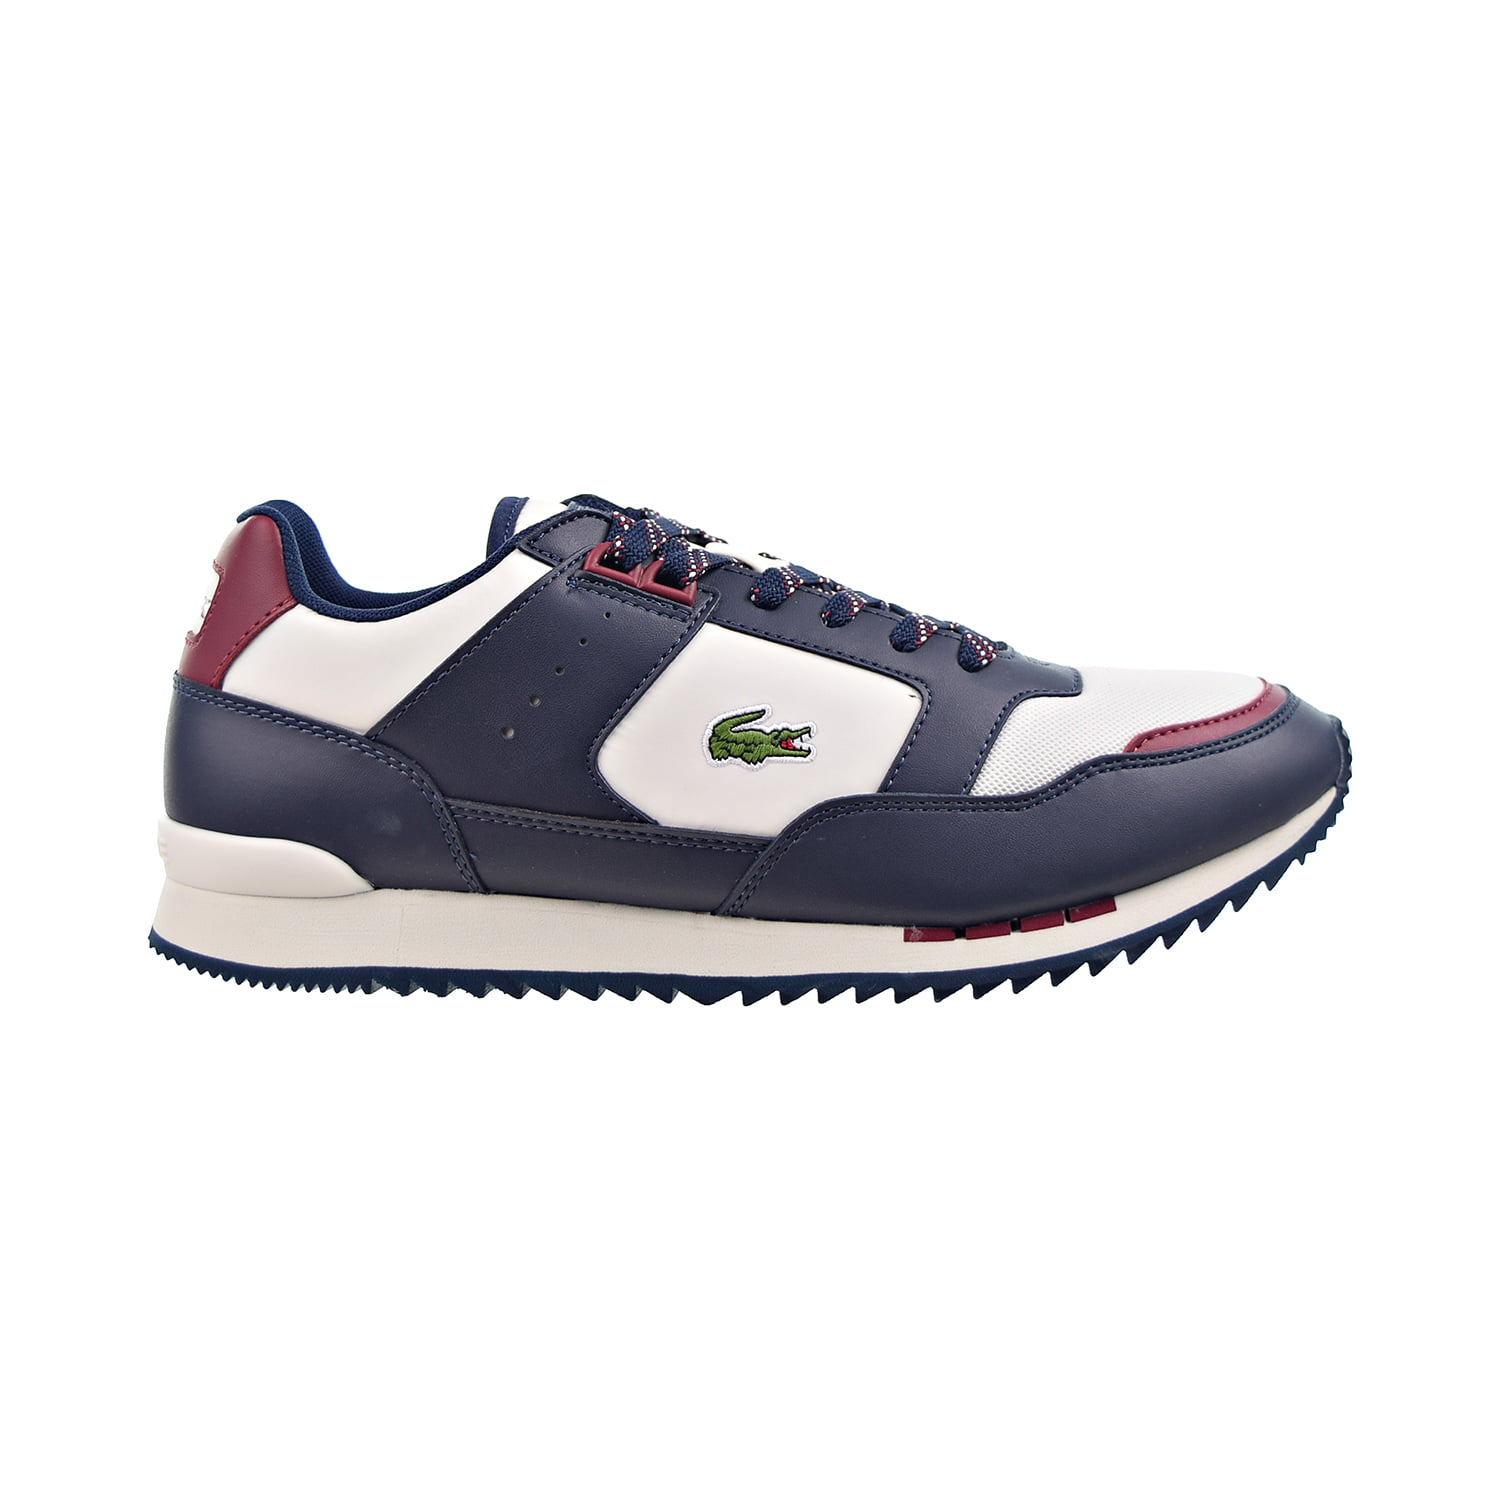 Lacoste Partner Piste 0121 3 SMA Men's Shoes Off White-Navy 7-42sma0066-wn1 - Walmart.com